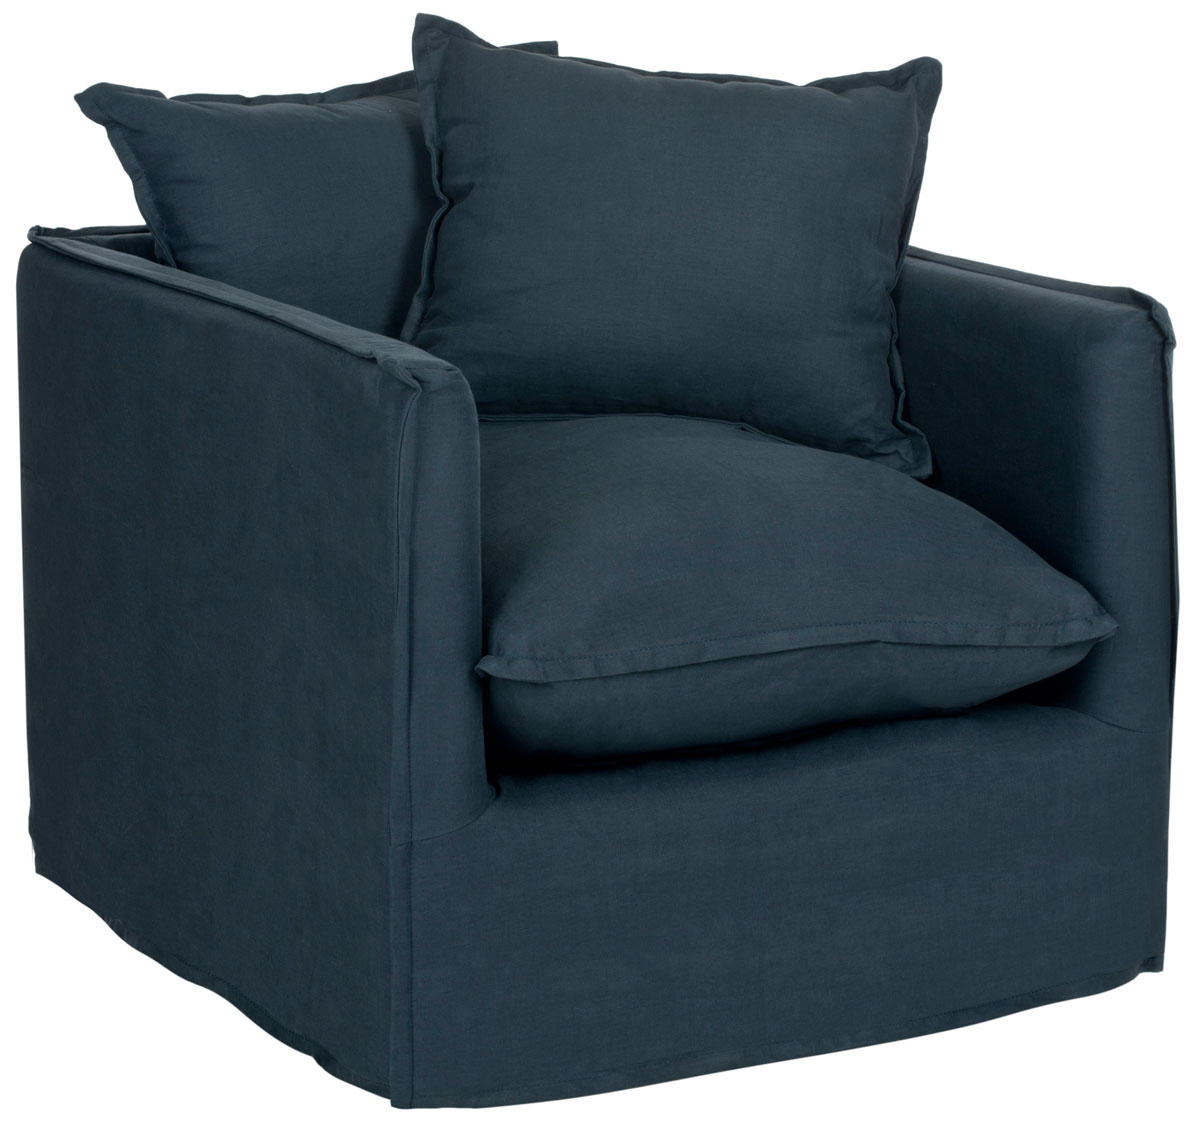 Joey Arm Chair - Blue/Black - Safavieh - Image 0